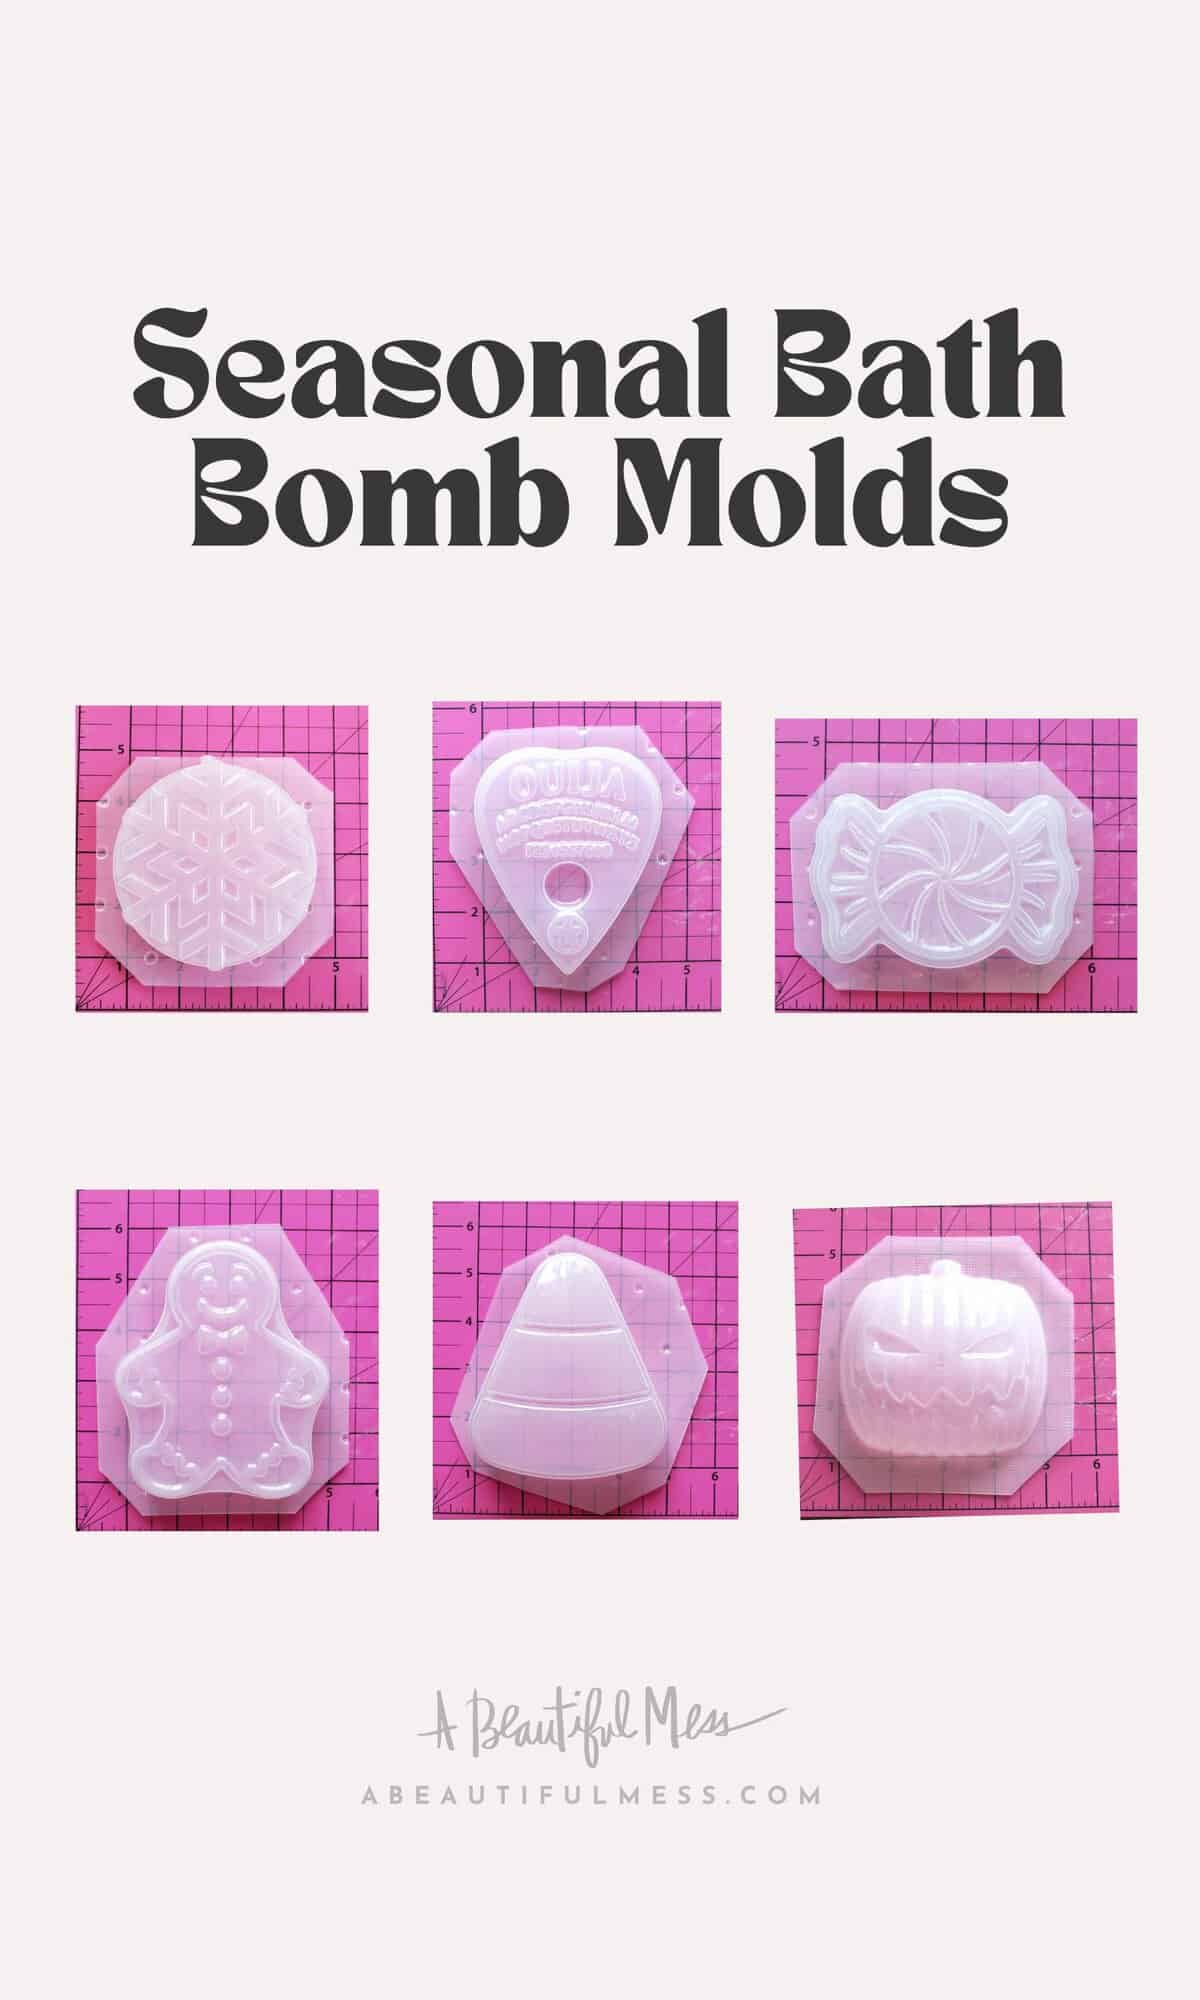 Seasonal bath bomb molds